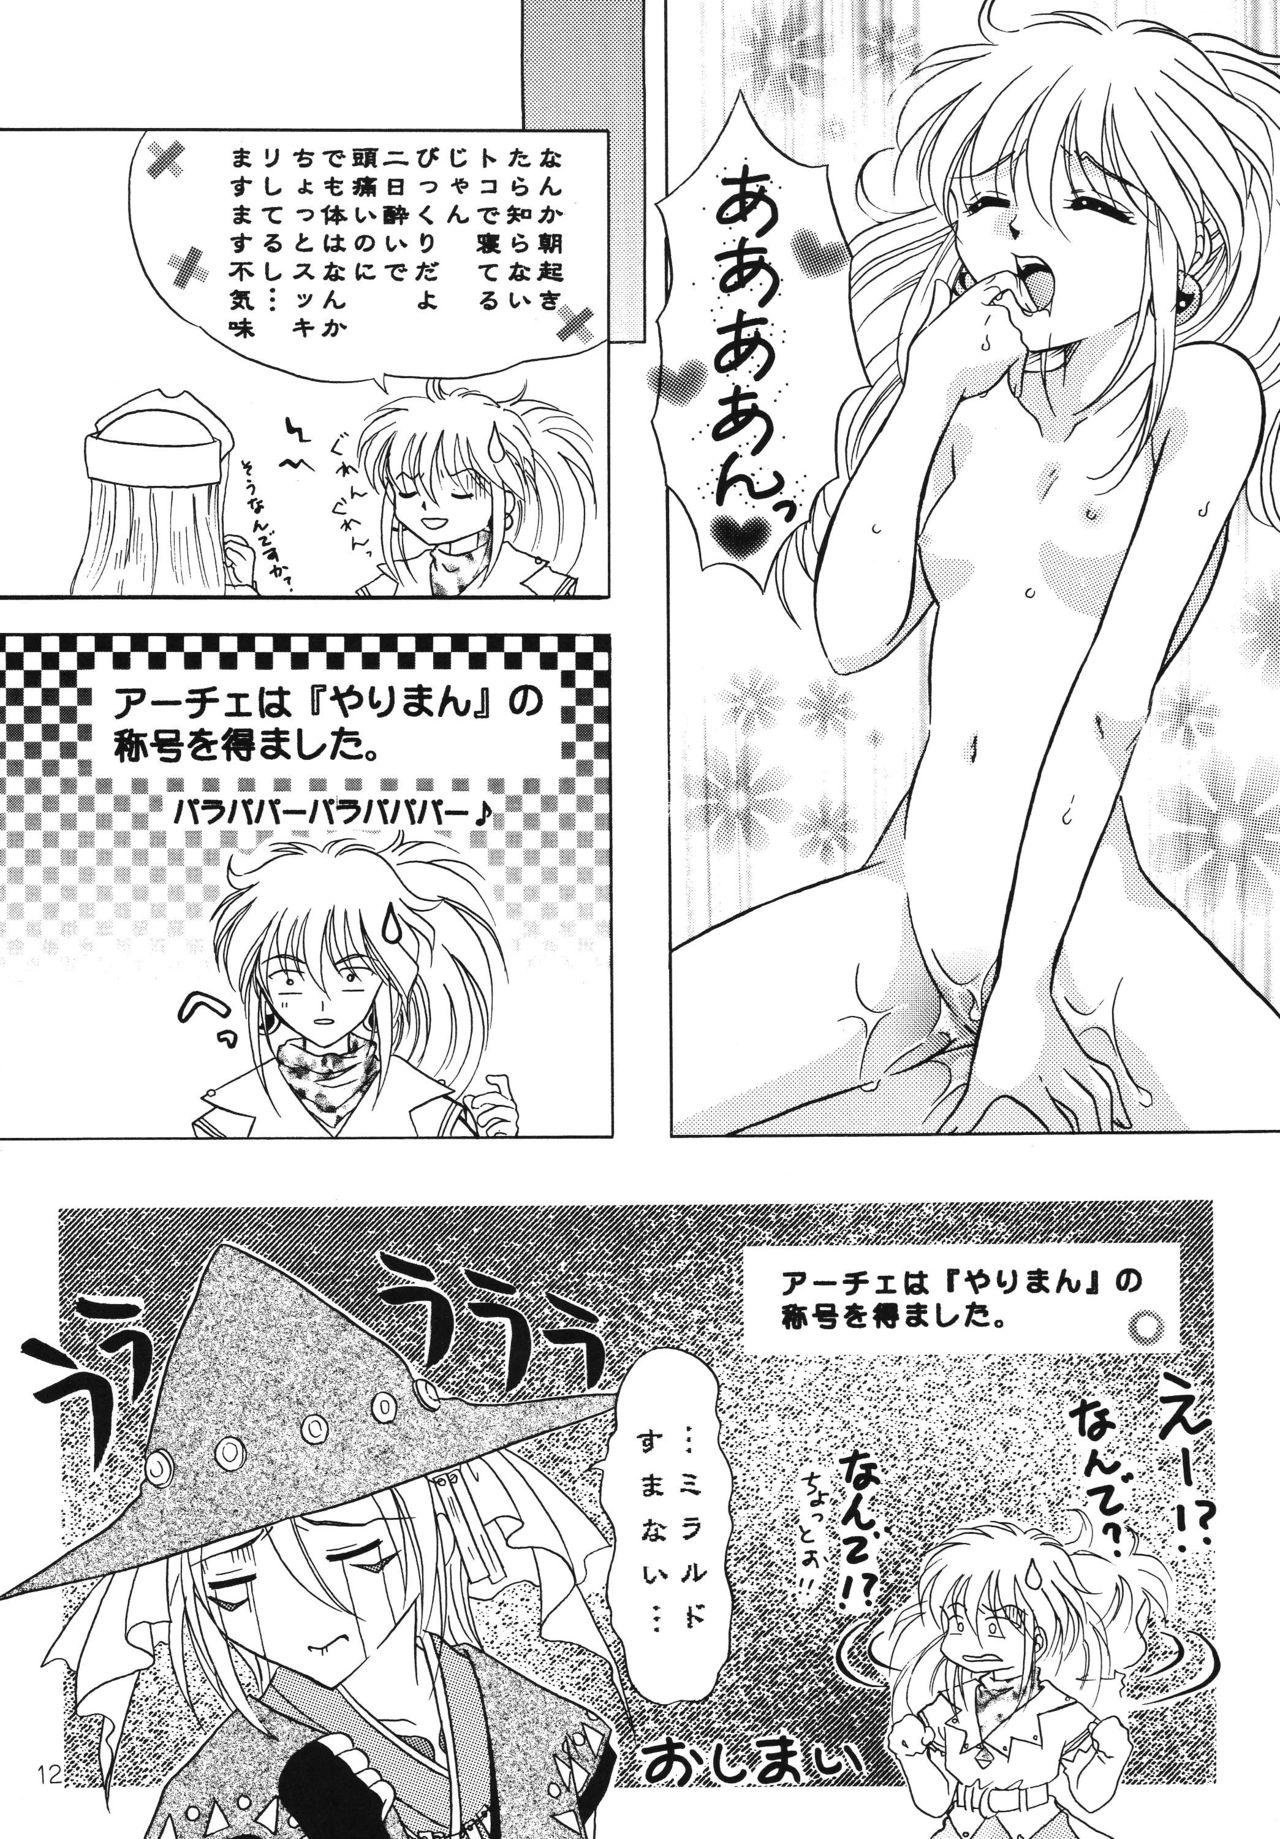 Cosplay Hoshikuzu no Tiara - Tales of phantasia Licking - Page 11